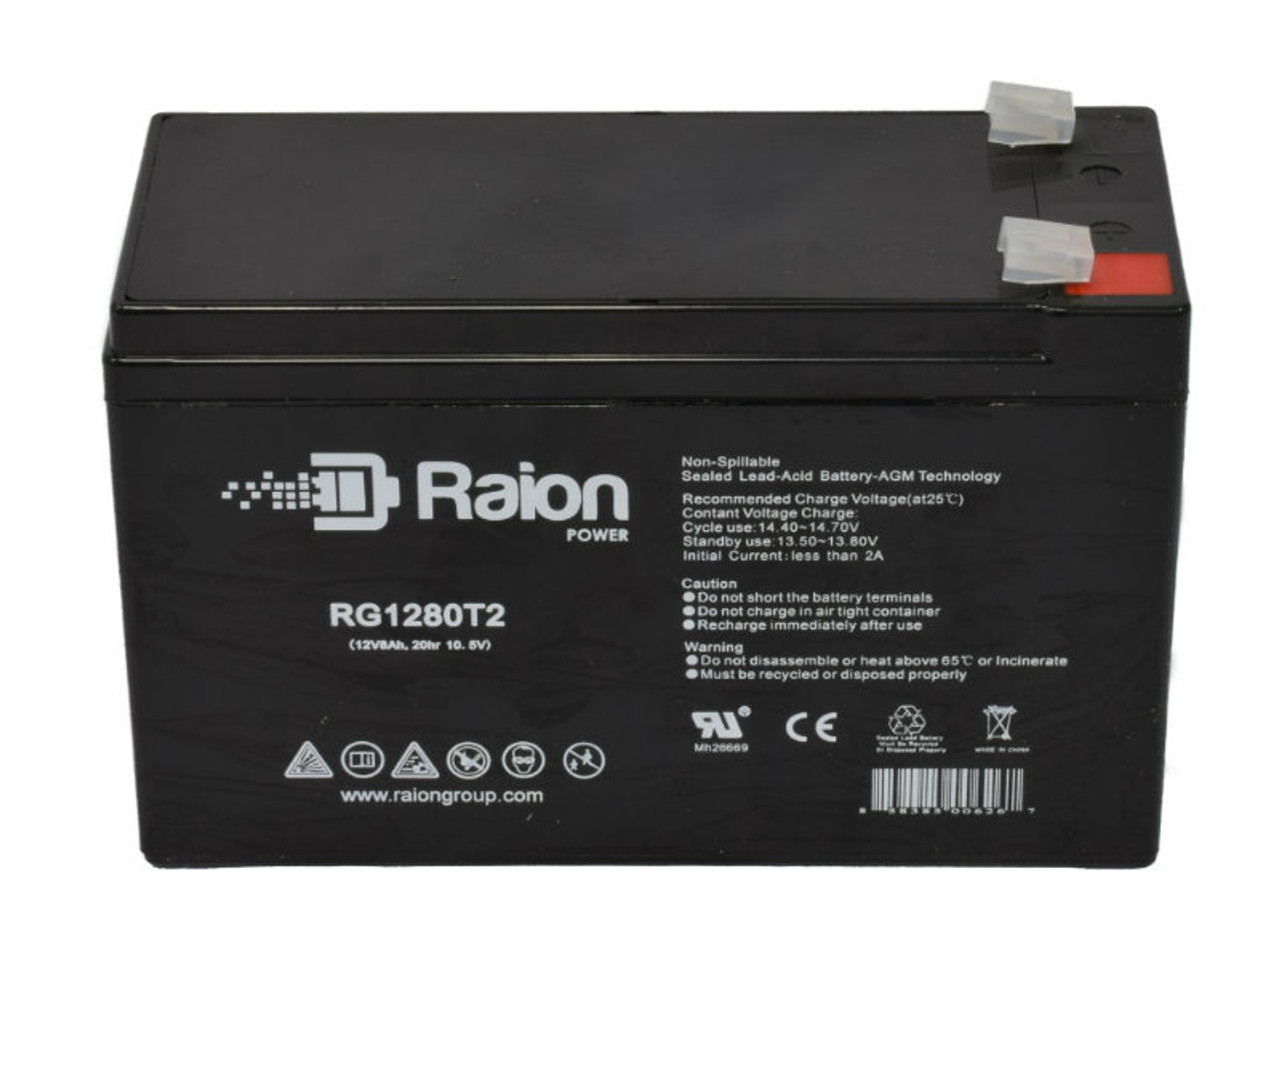 Raion Power Replacement 12V 8Ah Battery for Critikon 7350 Cardiac